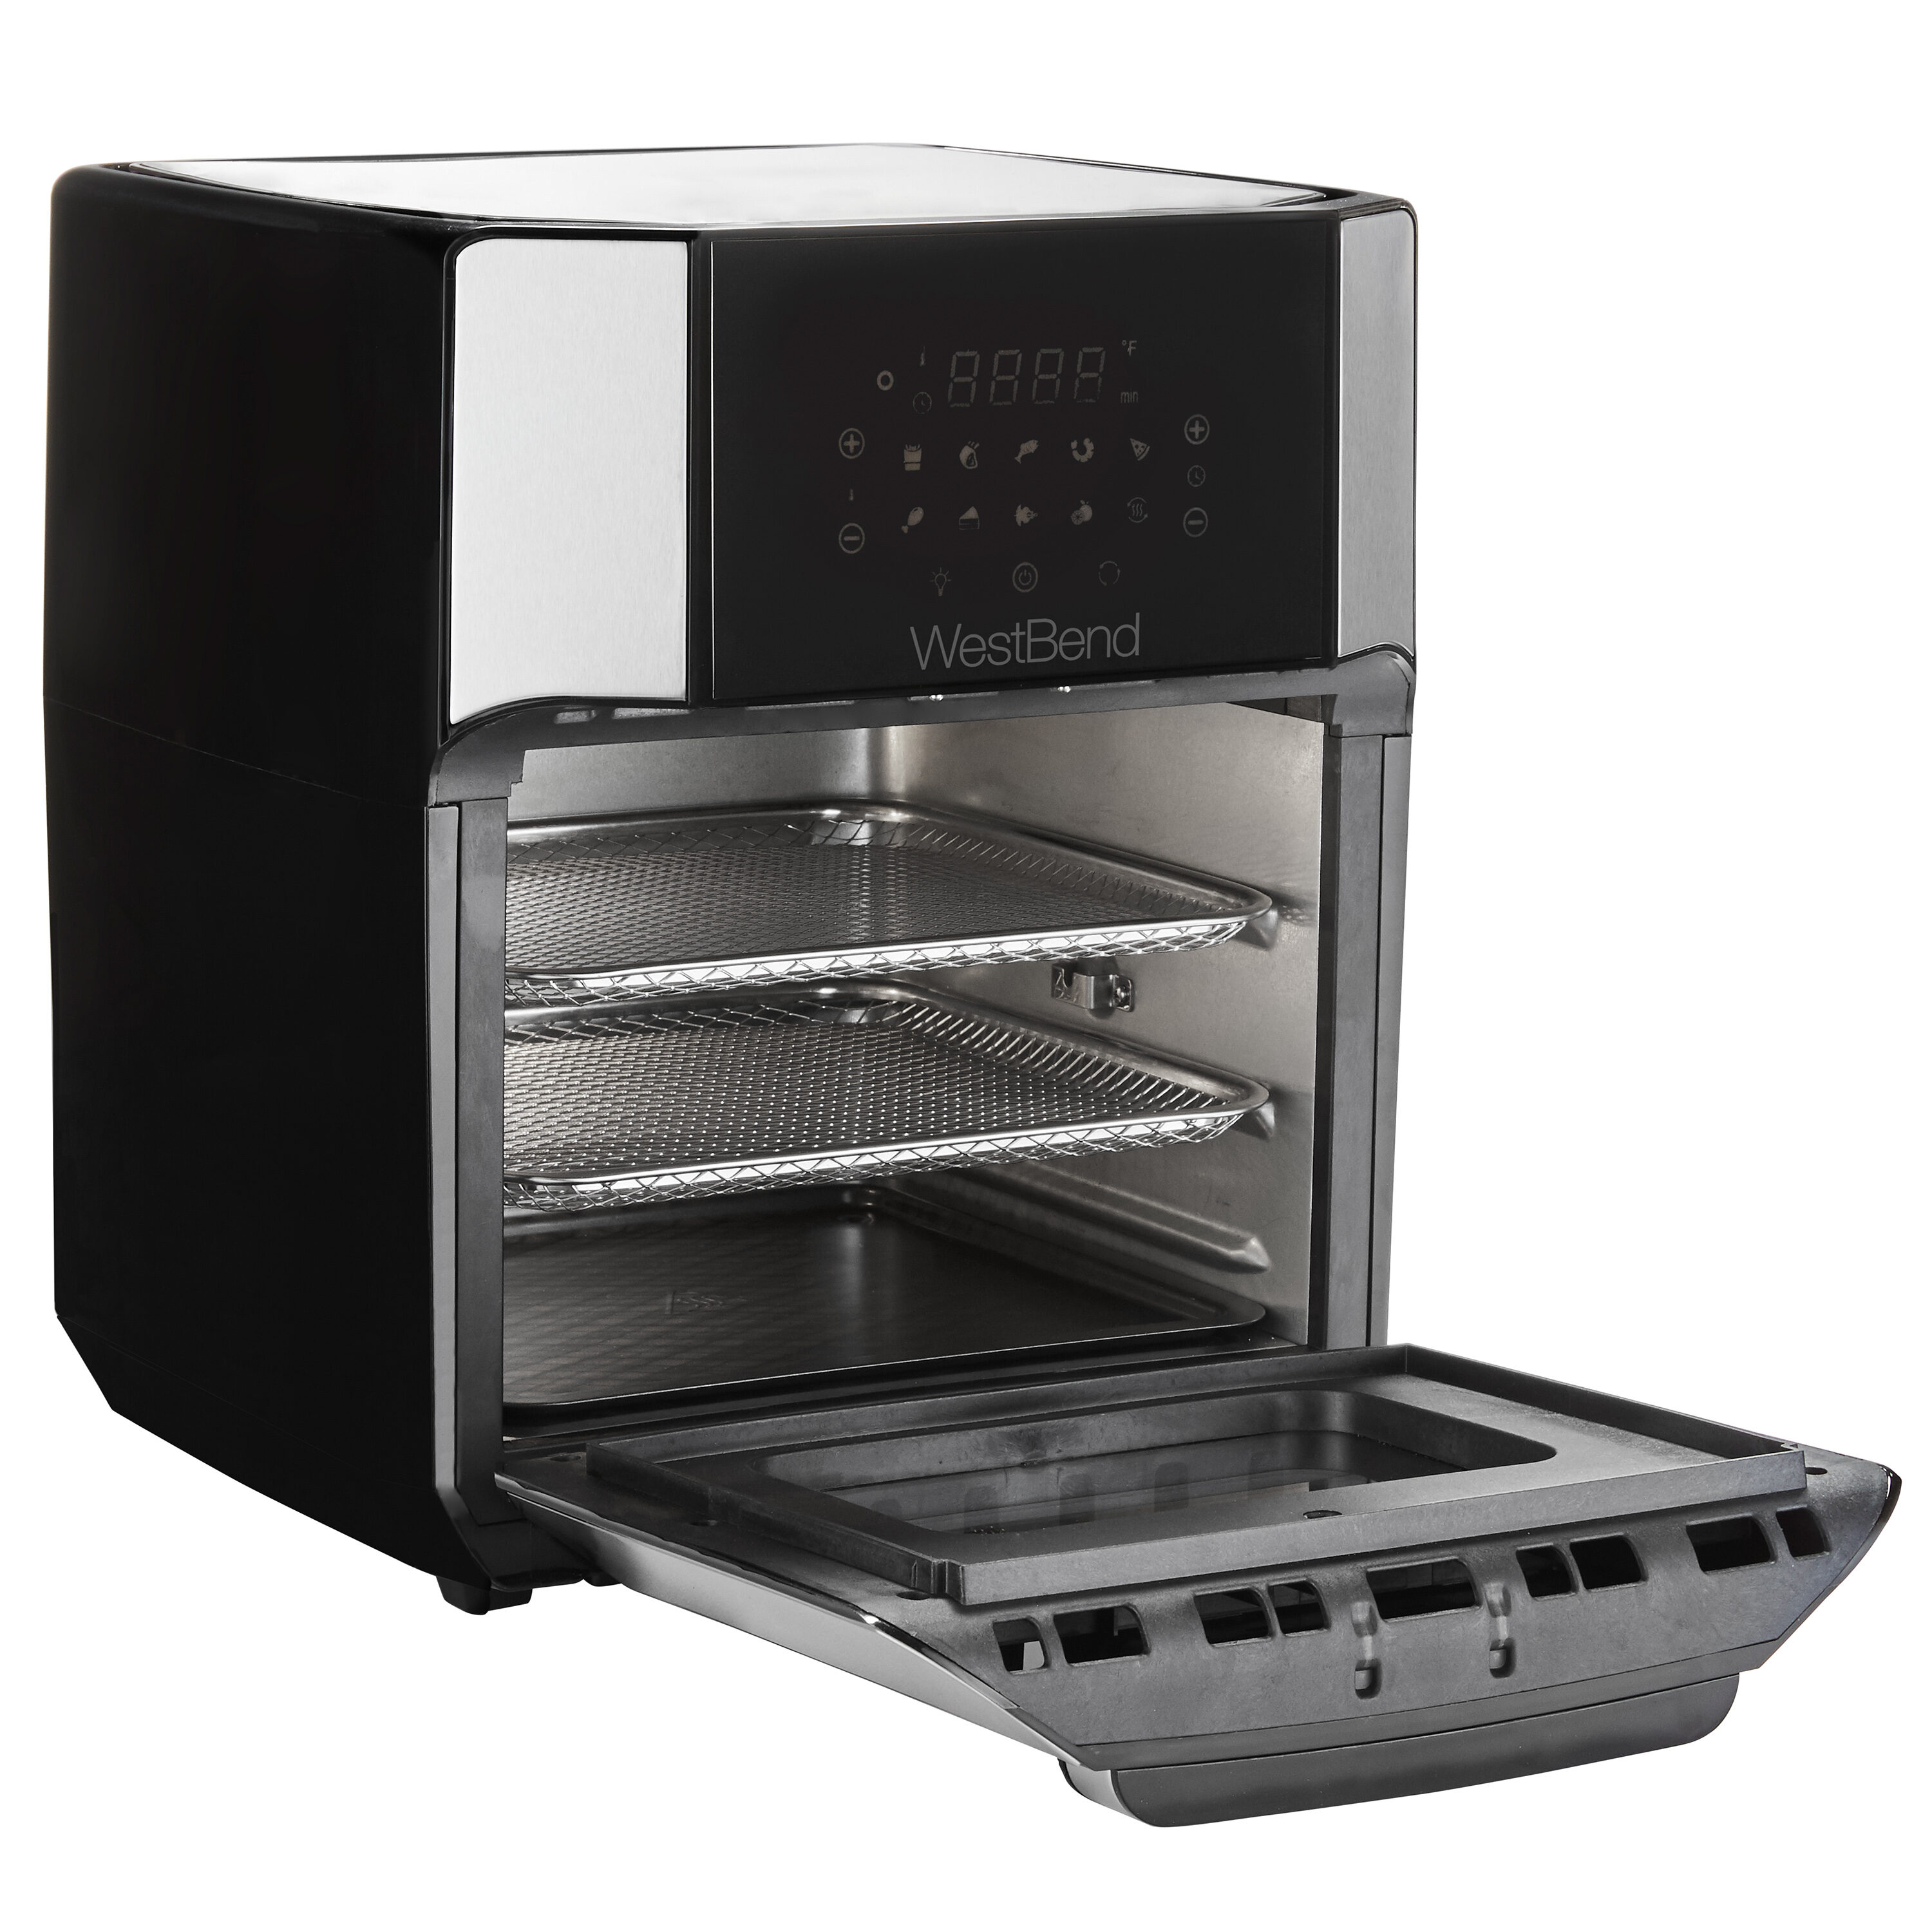  Kalorik Digital Air Fryer Oven 12.6 Quart, Black and Stainless  Steel : Home & Kitchen